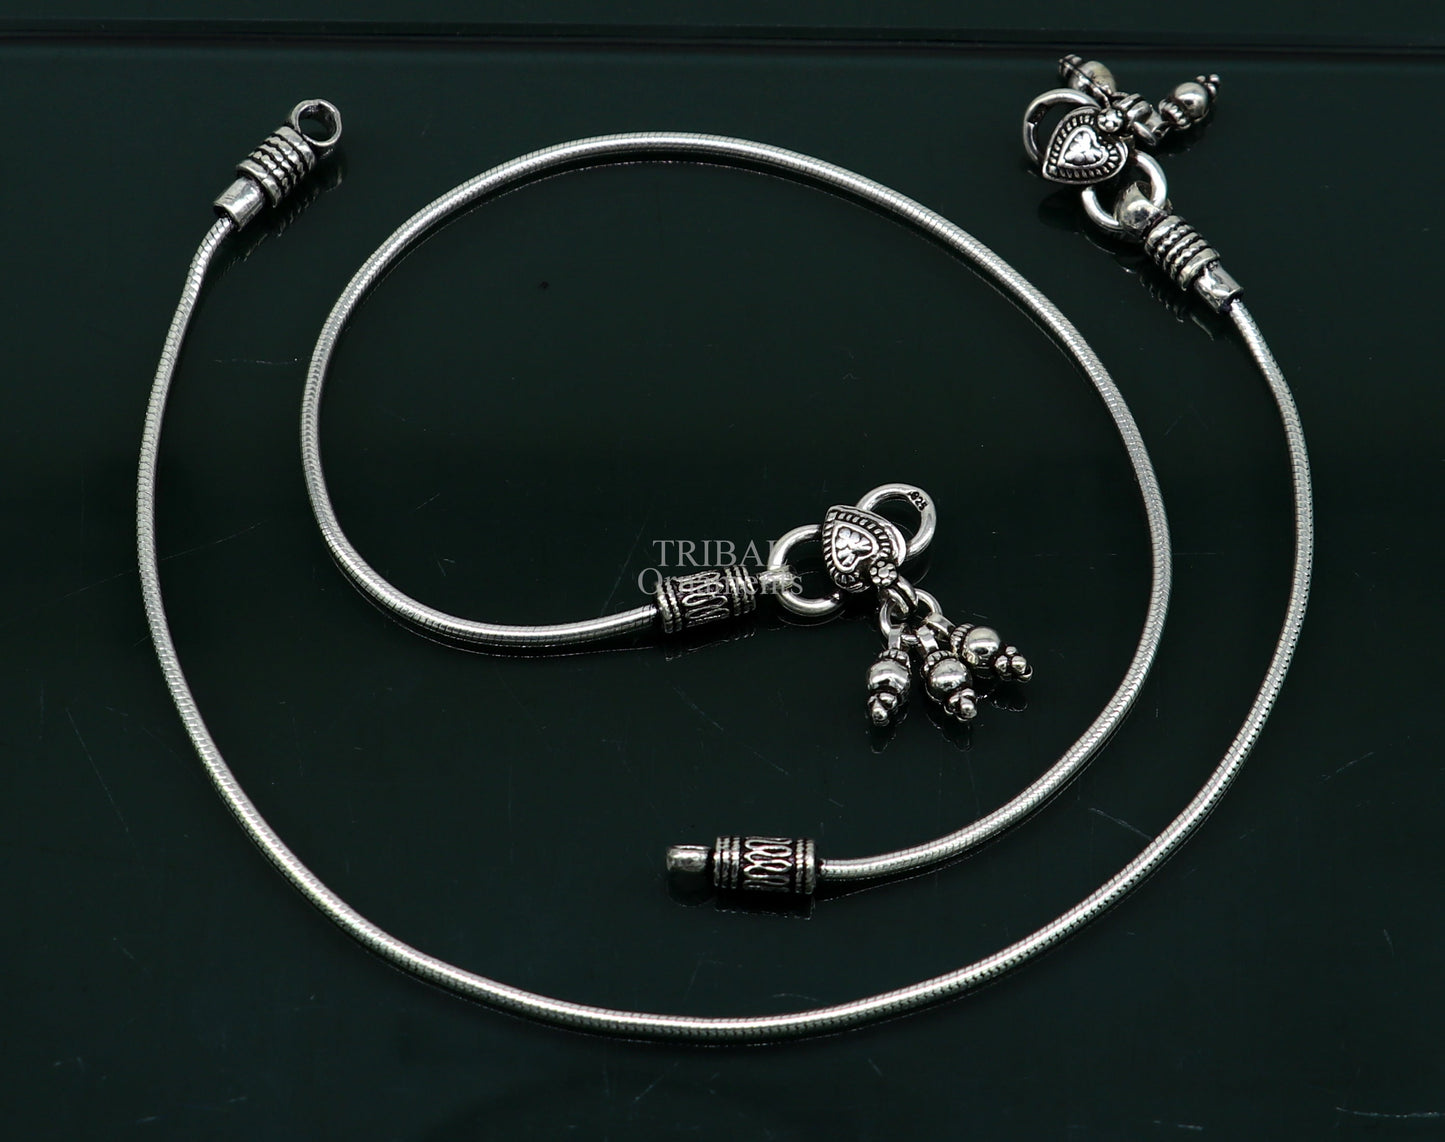 10.5"Handmade snake chain 925 sterling silver ankle bracelet, silver anklets, foot bracelet amazing belly dance jewelry gift her nank460 - TRIBAL ORNAMENTS